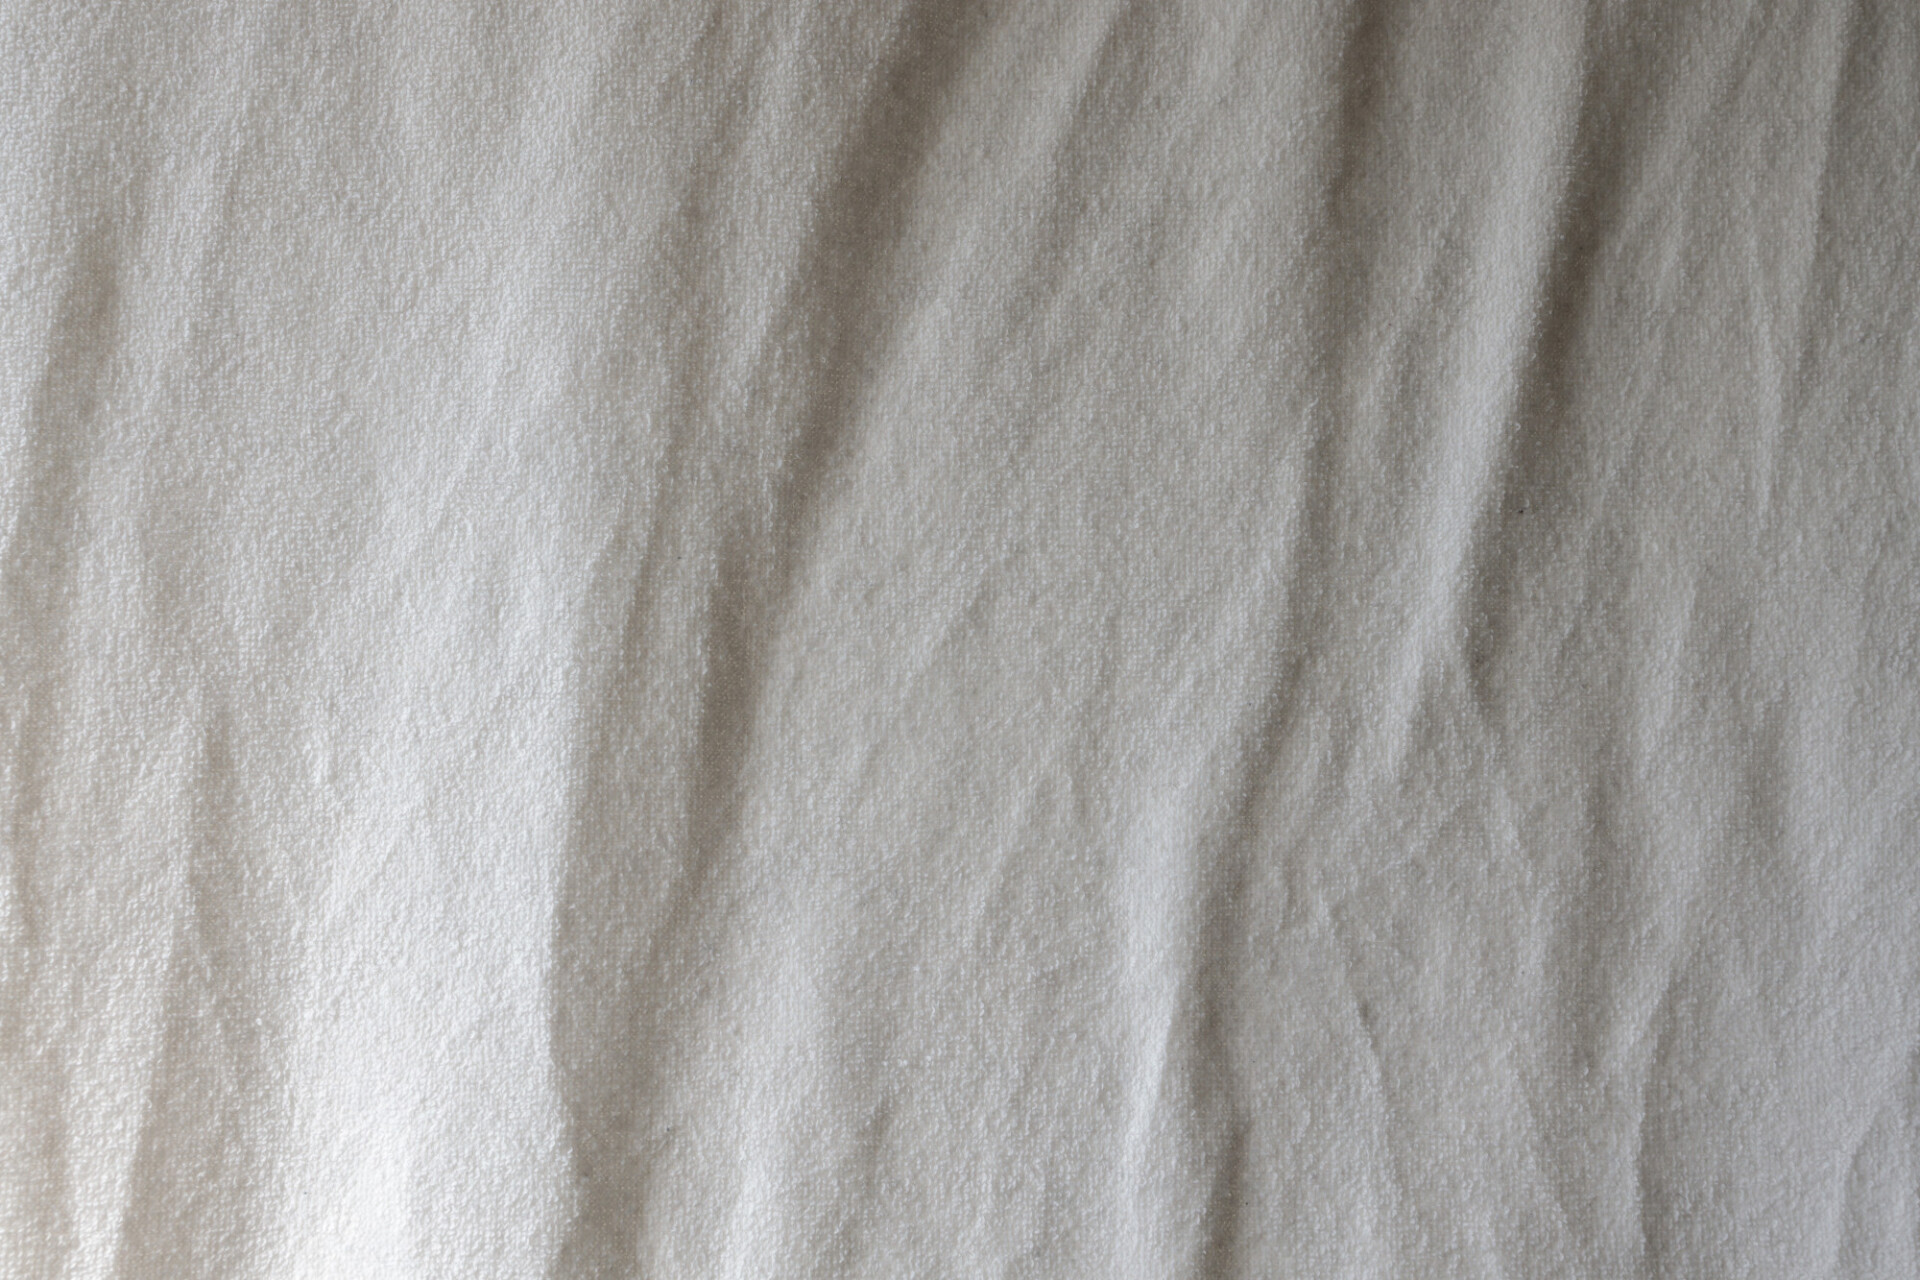 White cloth sheet texture